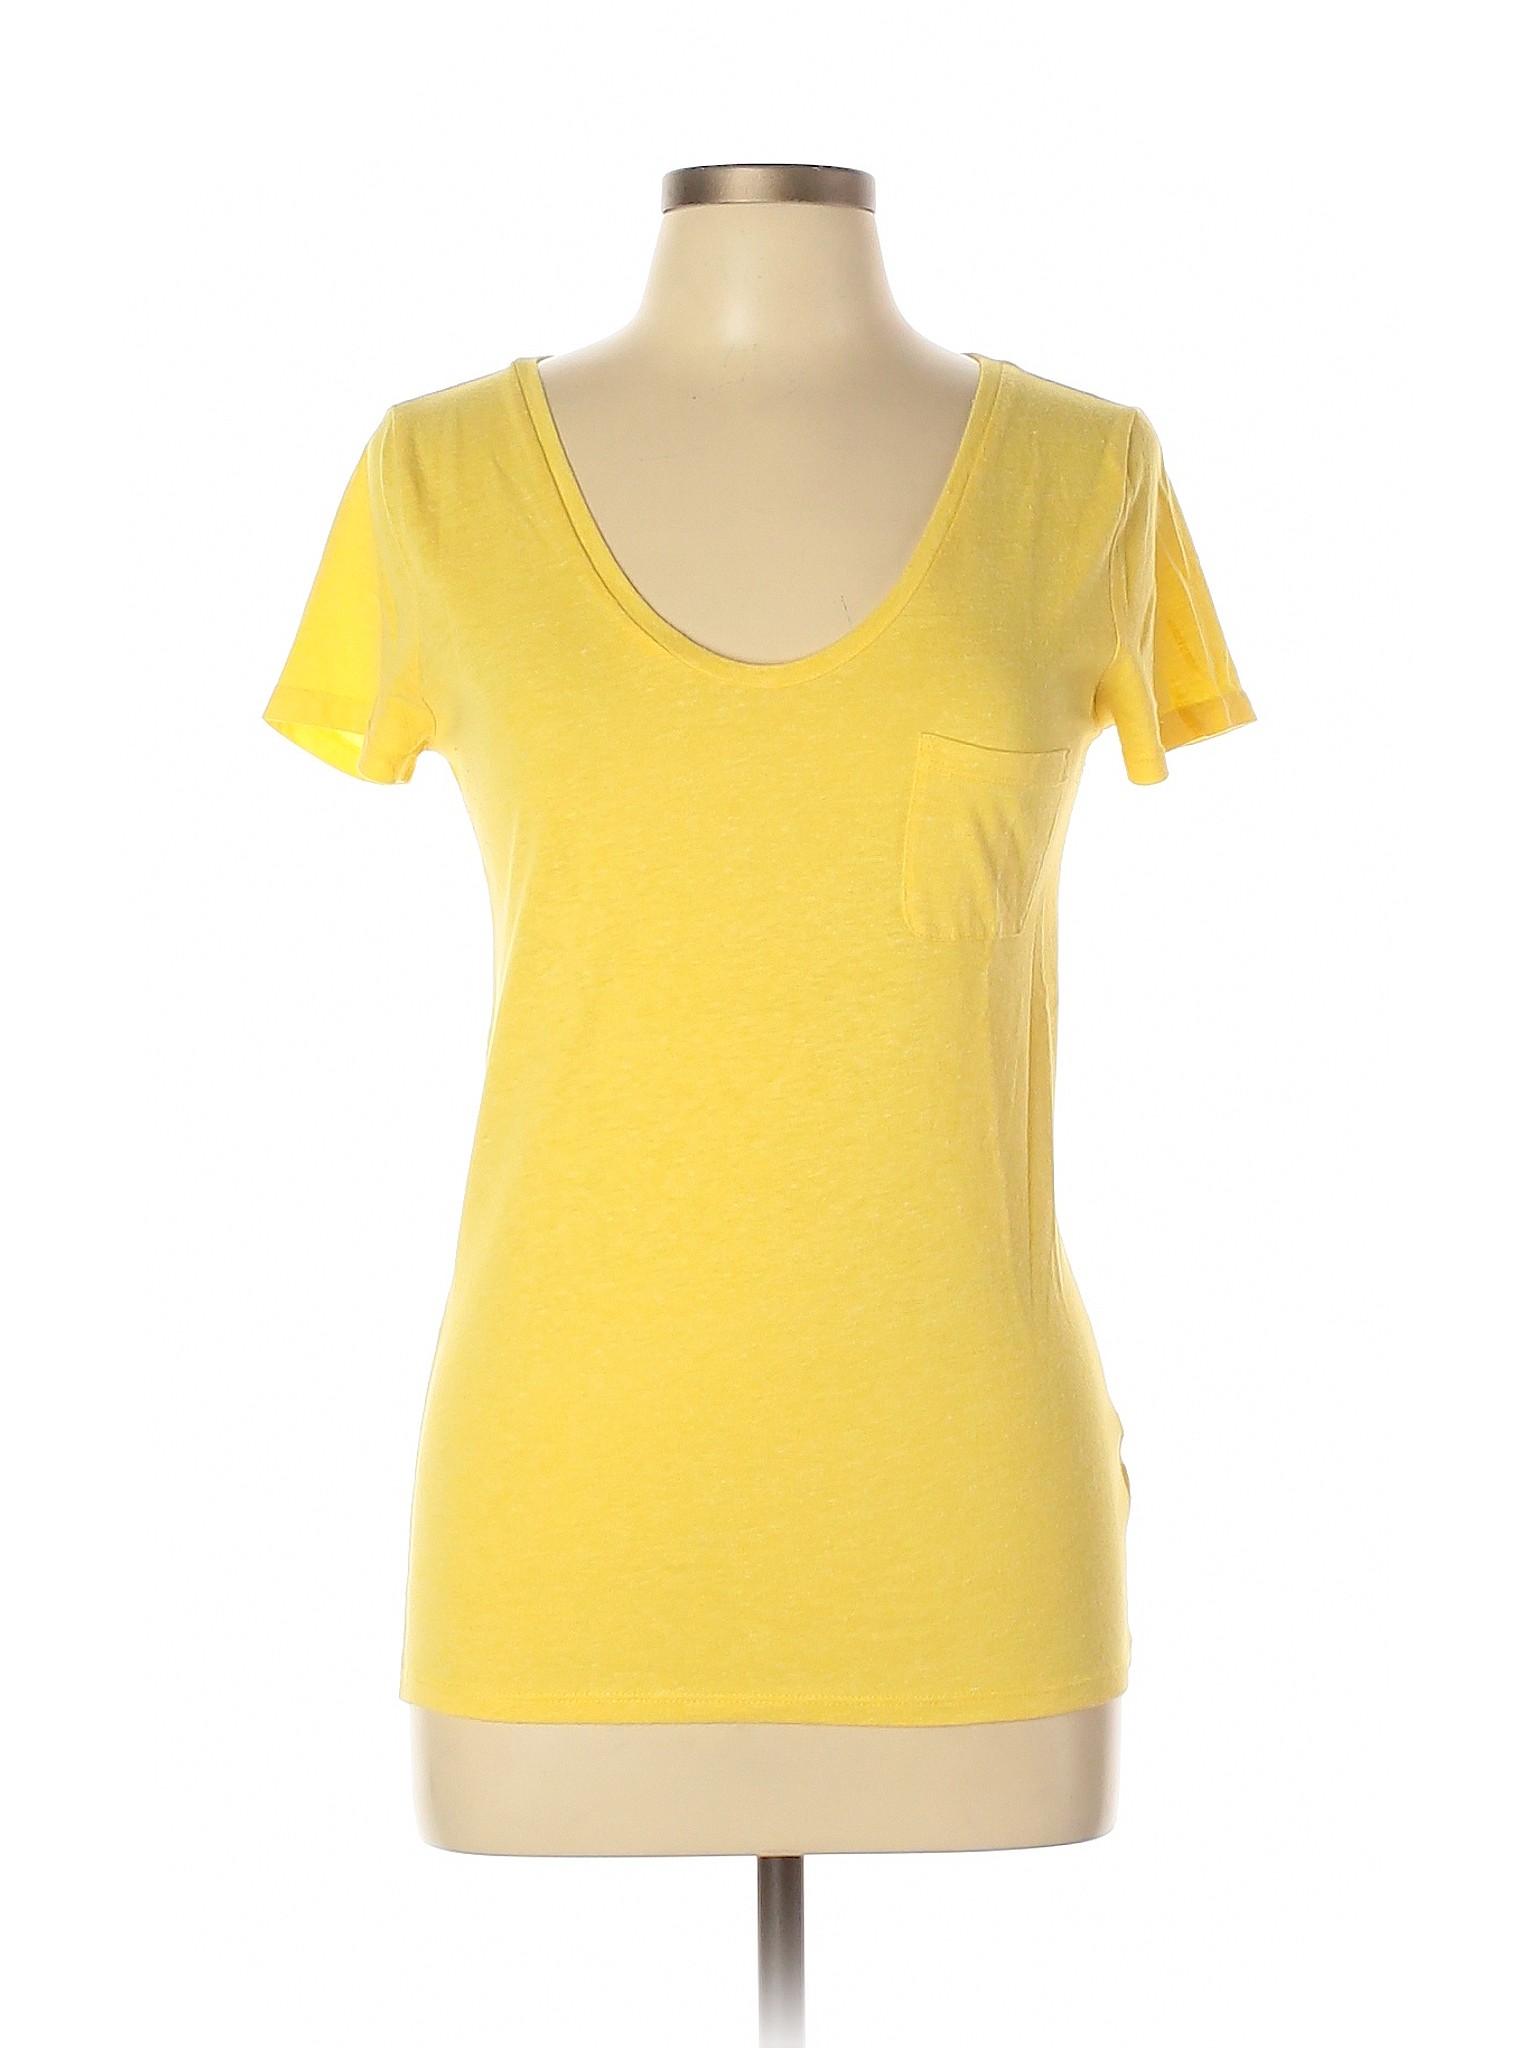 J.Crew Factory Store Women Yellow Short Sleeve T-Shirt M | eBay